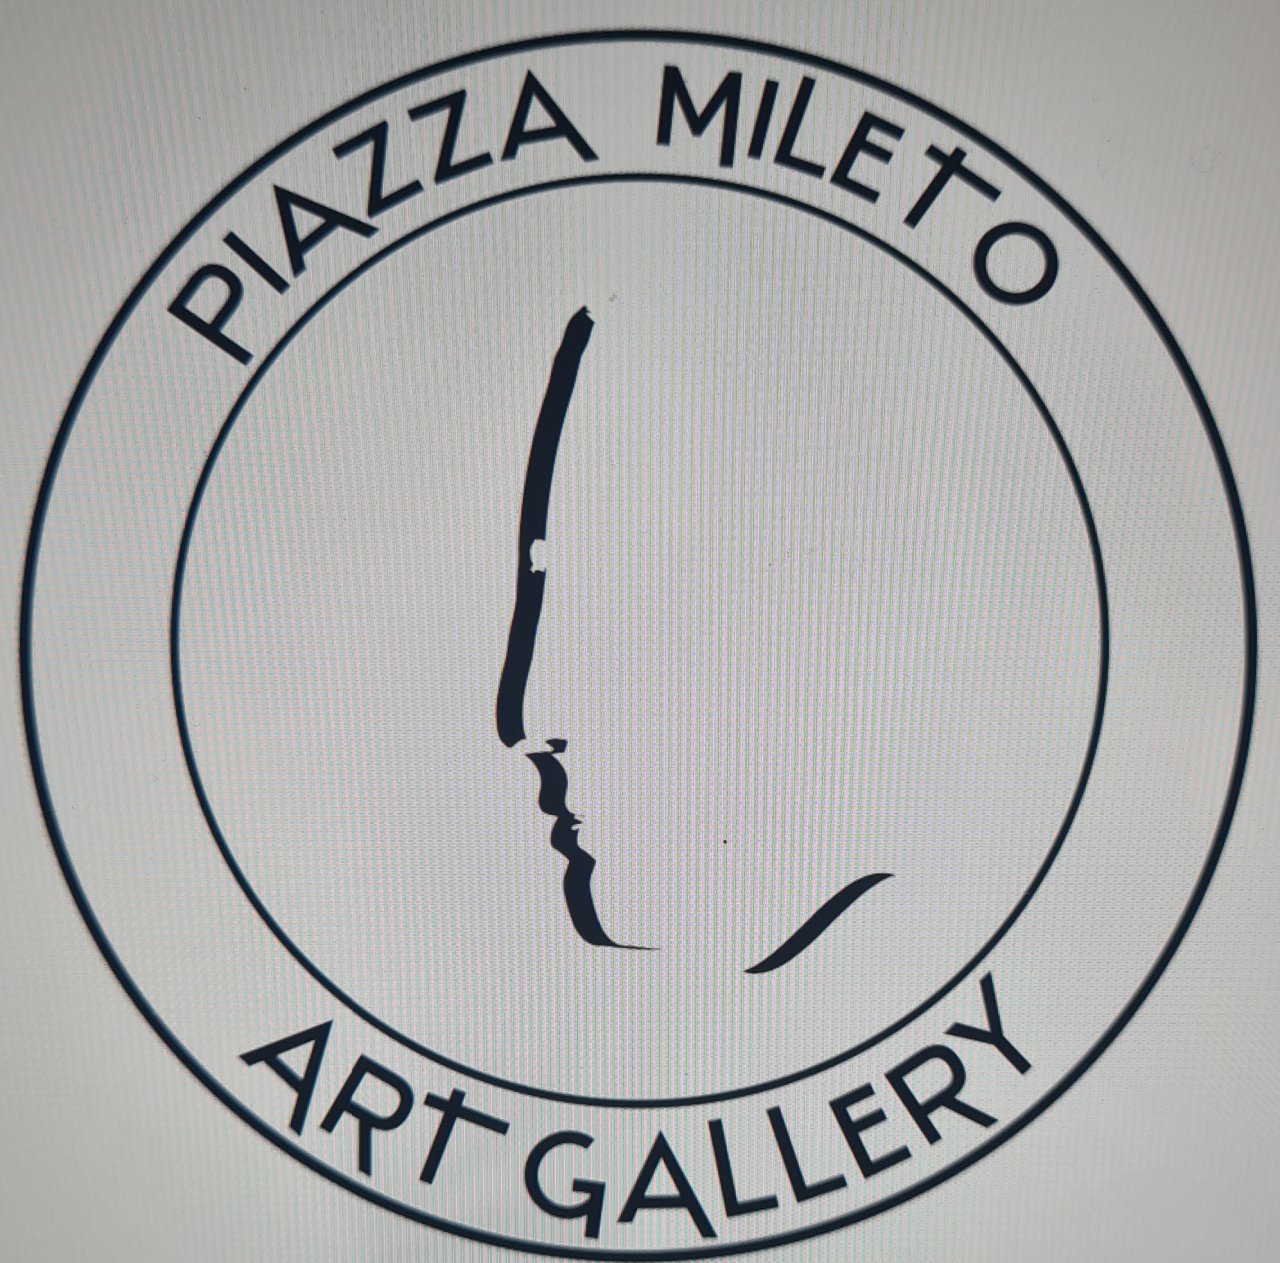 Piazza Mileto Art Gallery